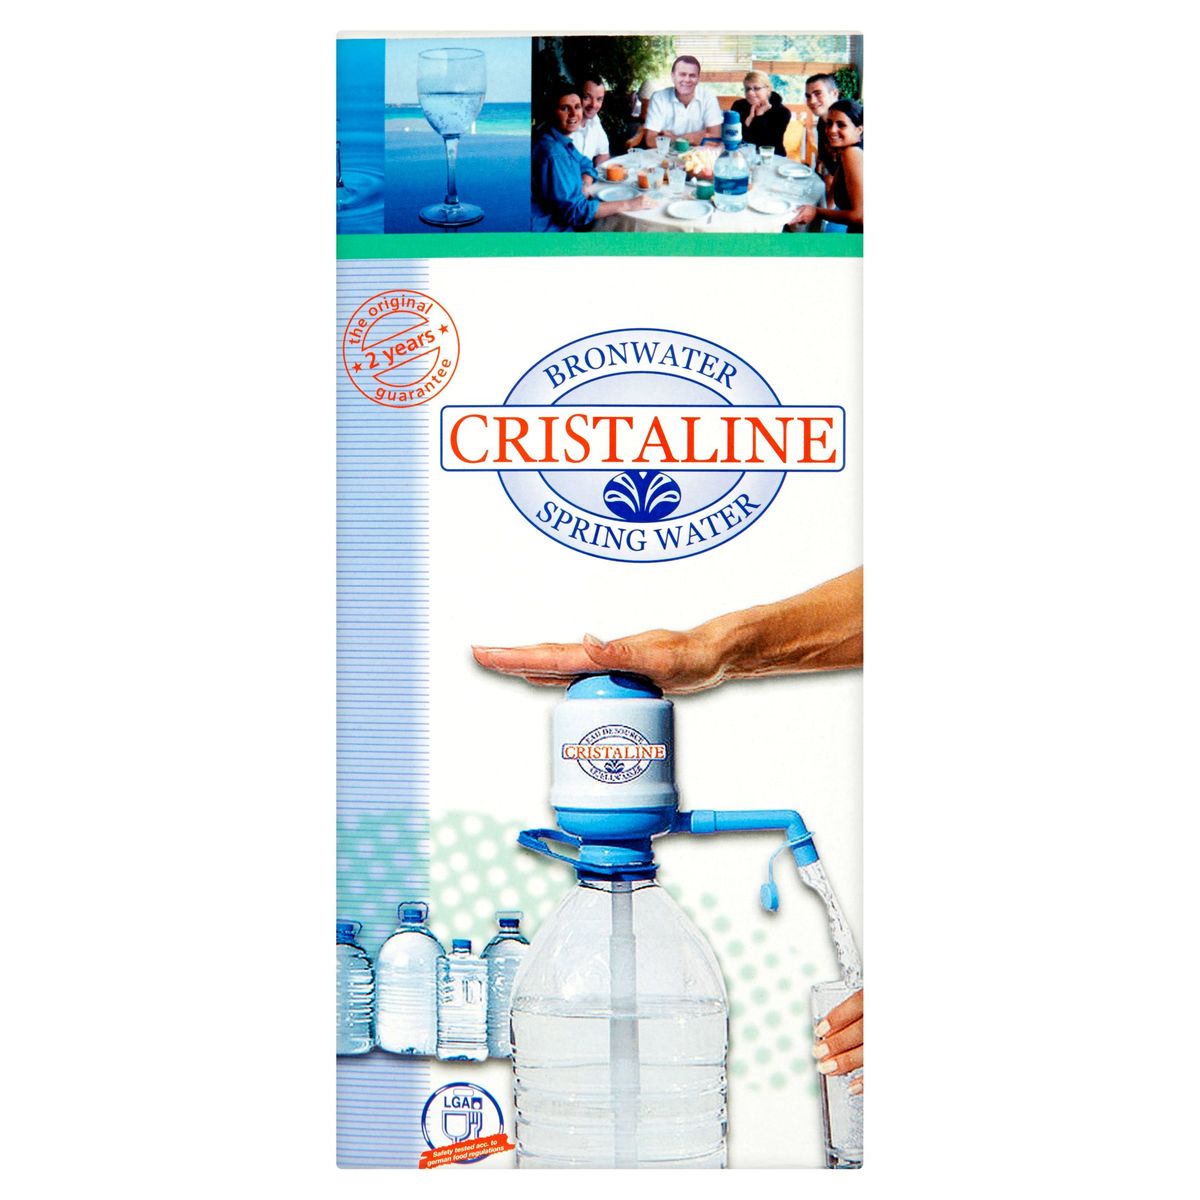 Cristaline Bronwater